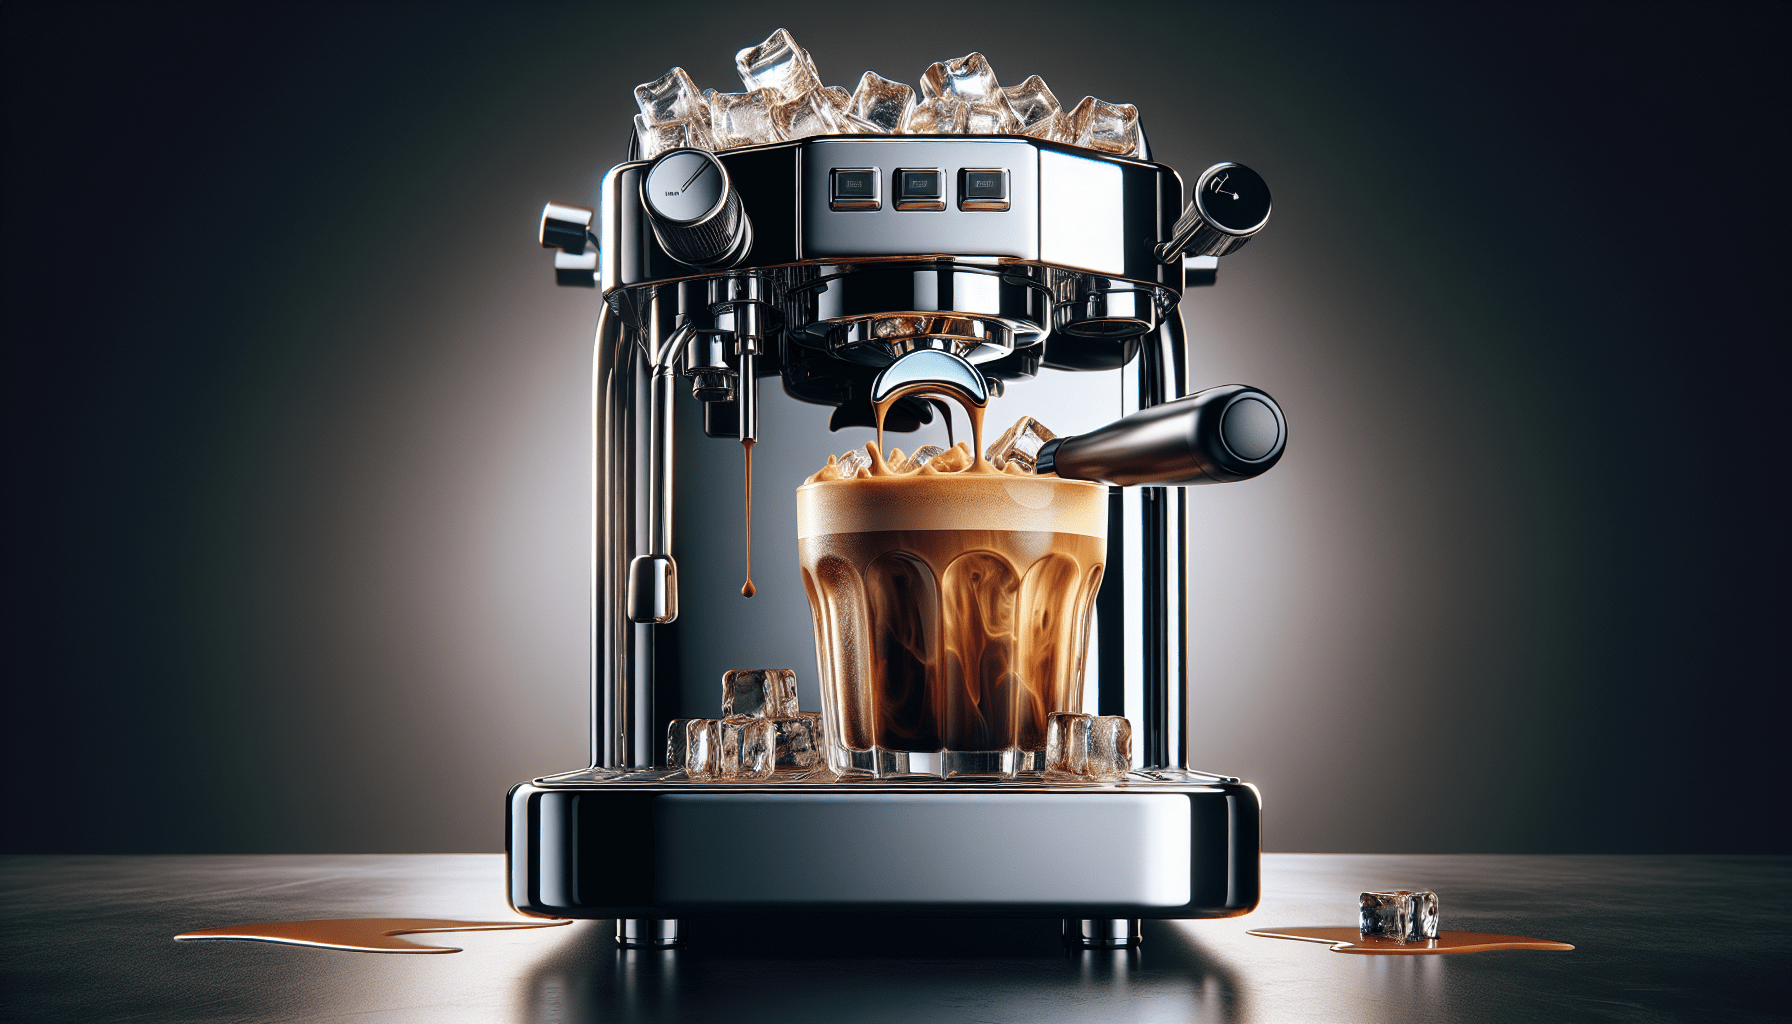 How To Make Iced Coffee With Espresso Machine?